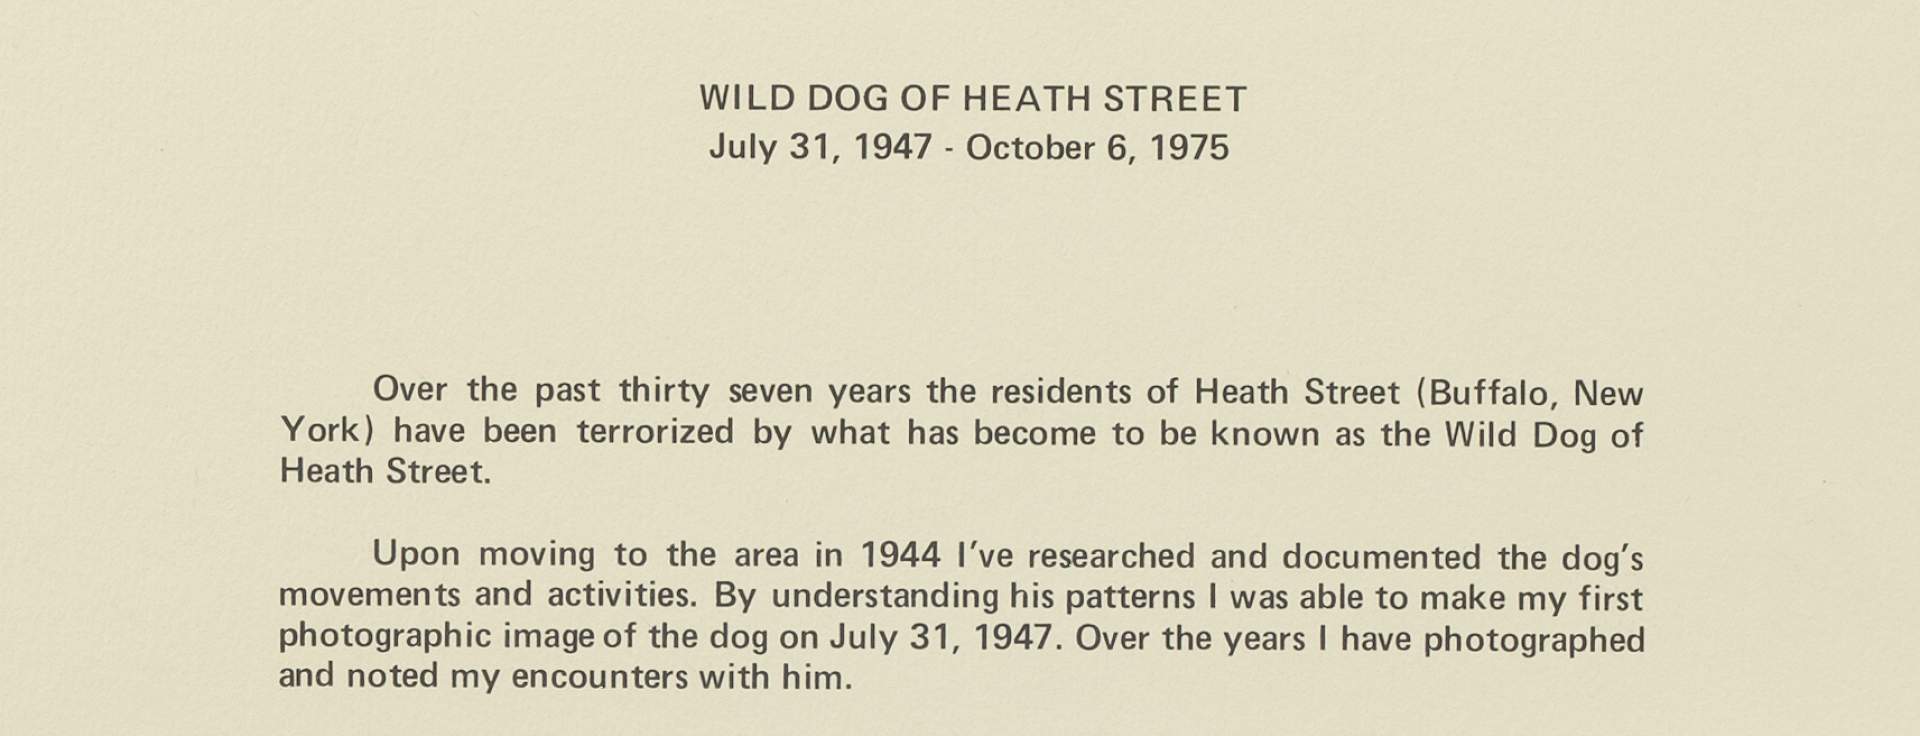 Wild Dog of Heath Street, July 31, 1947 - October 6, 1975 (Introduction panel)